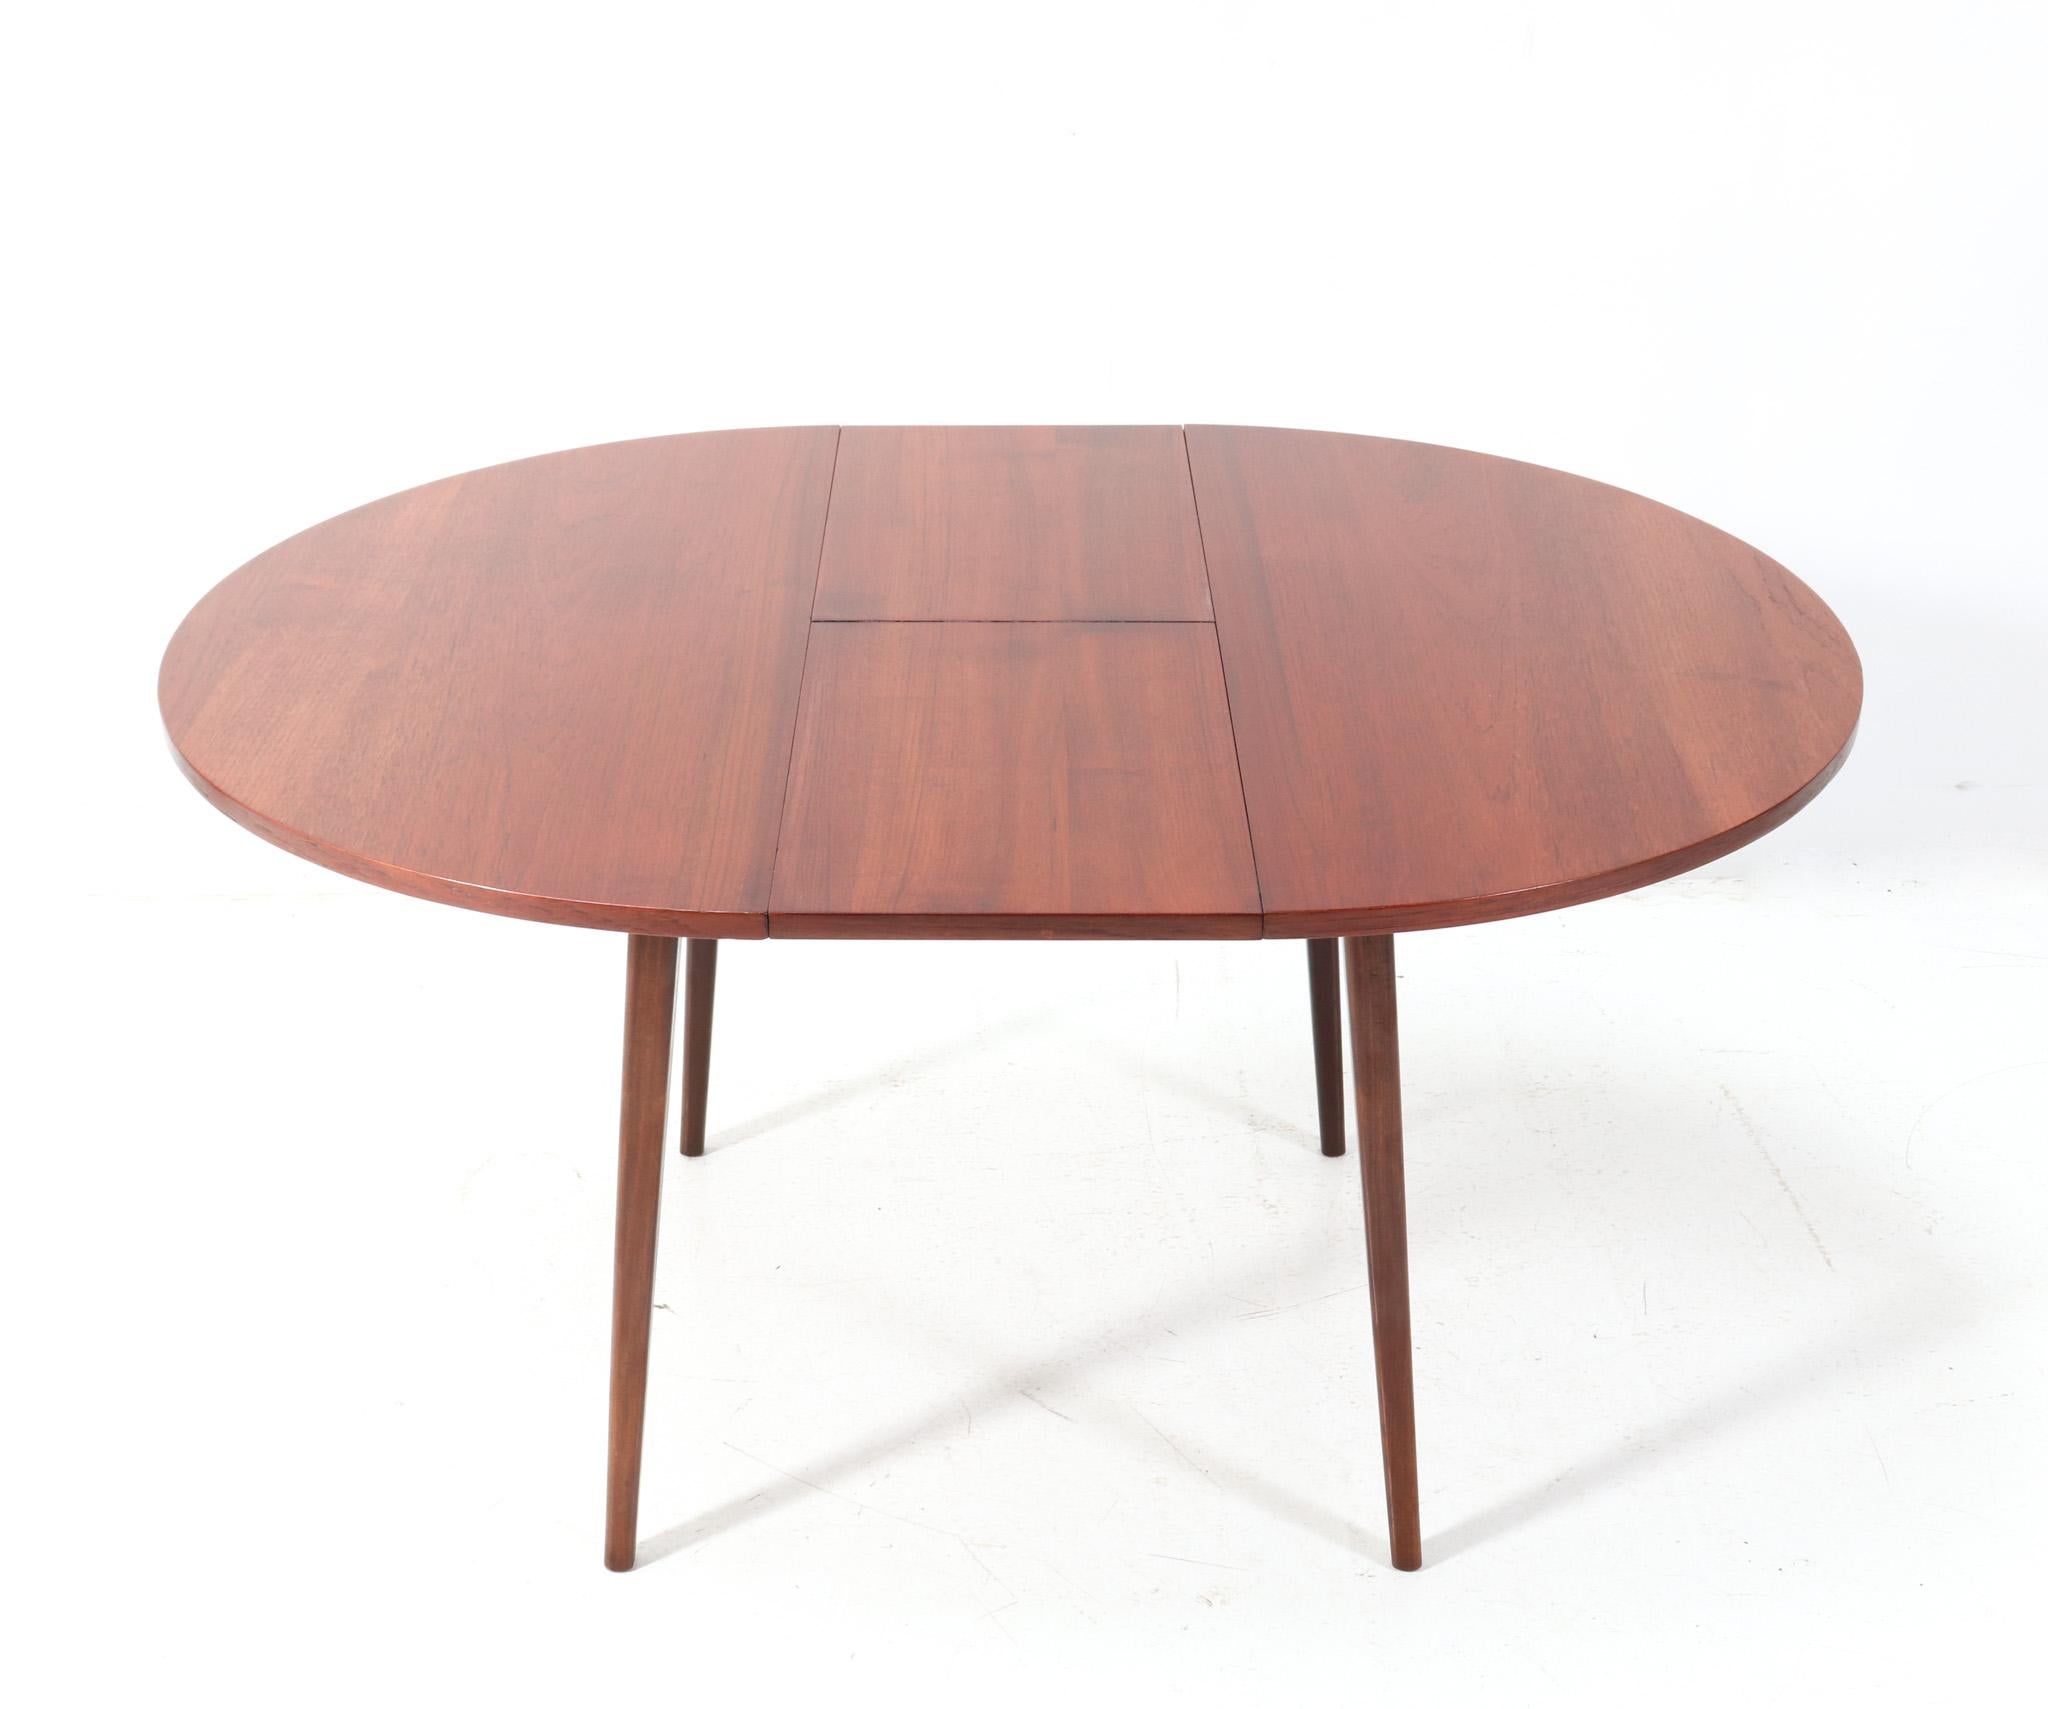 Teak Mid-Century Modern Extendable Dining Table by Louis van Teeffelen, 1950s For Sale 2